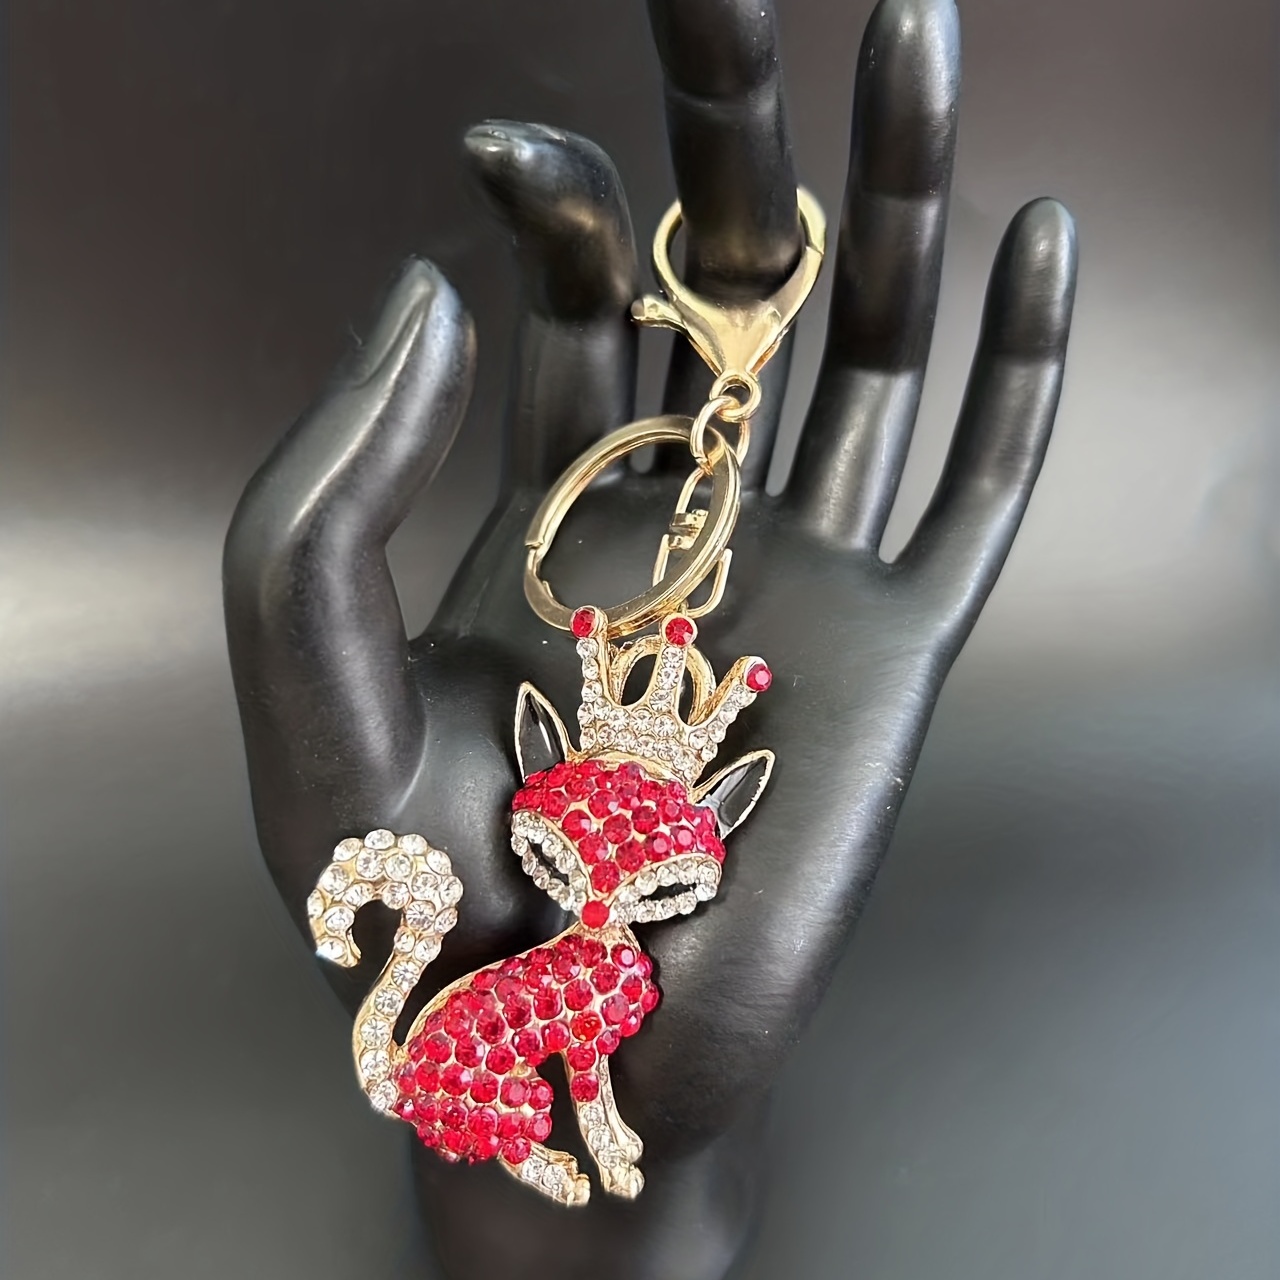 Keychain Keyring Charm Pendant, Ladybug Car Key Chains Cute Purse Charm  Metal Bling Key Ring for Women Girls